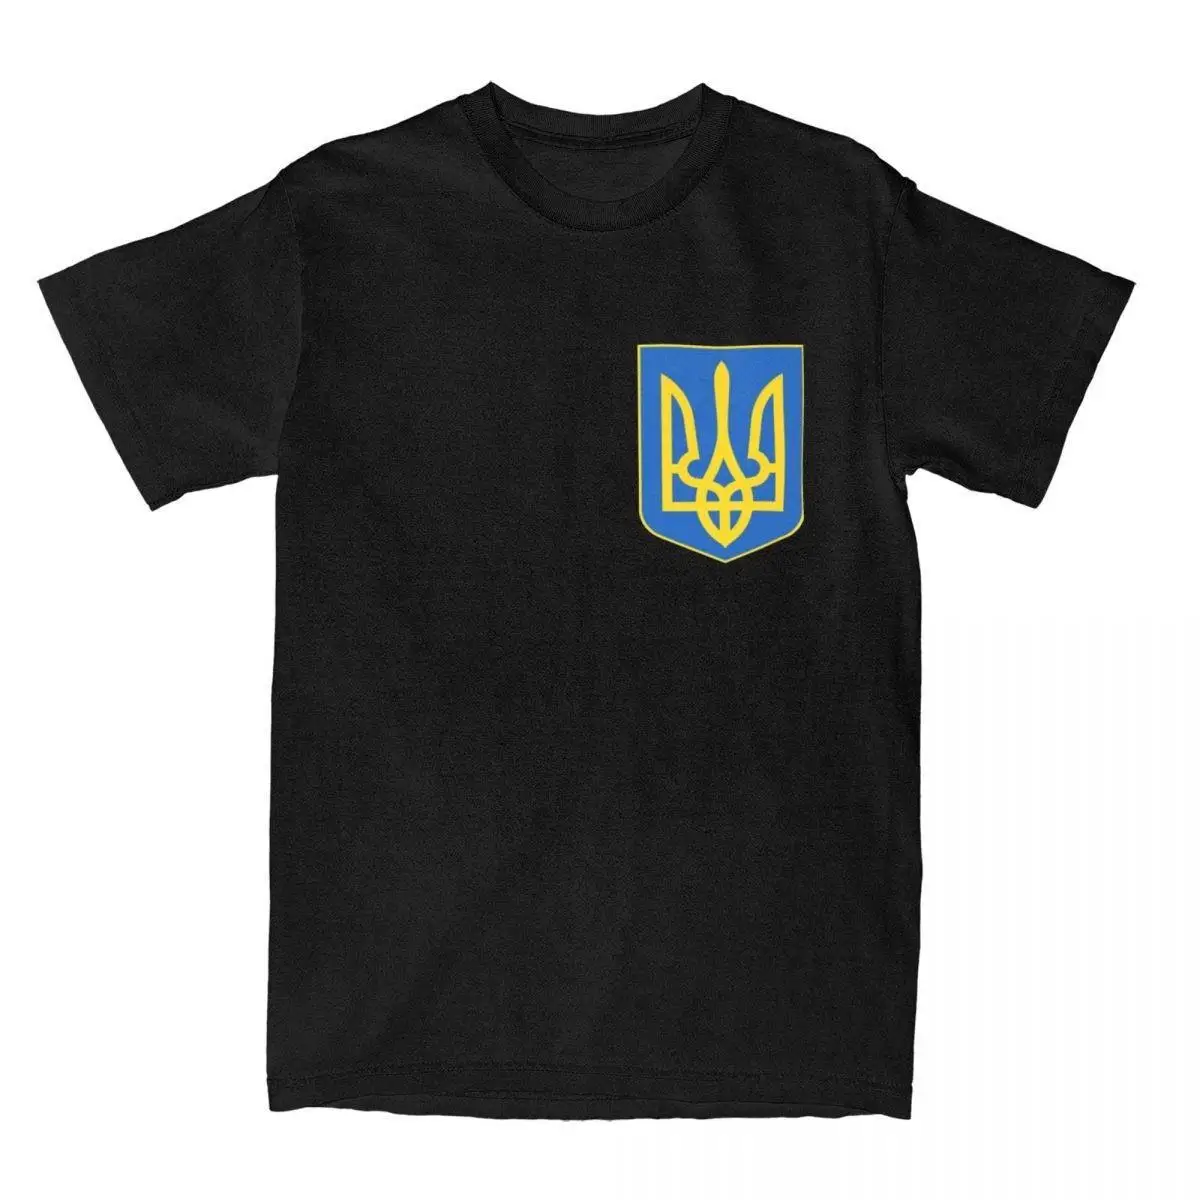 Unique Ukraine Coat Of Arms T-Shirt Men Round Neck Cotton T Shirts Short Sleeve Tee Shirt Gift Idea Tops